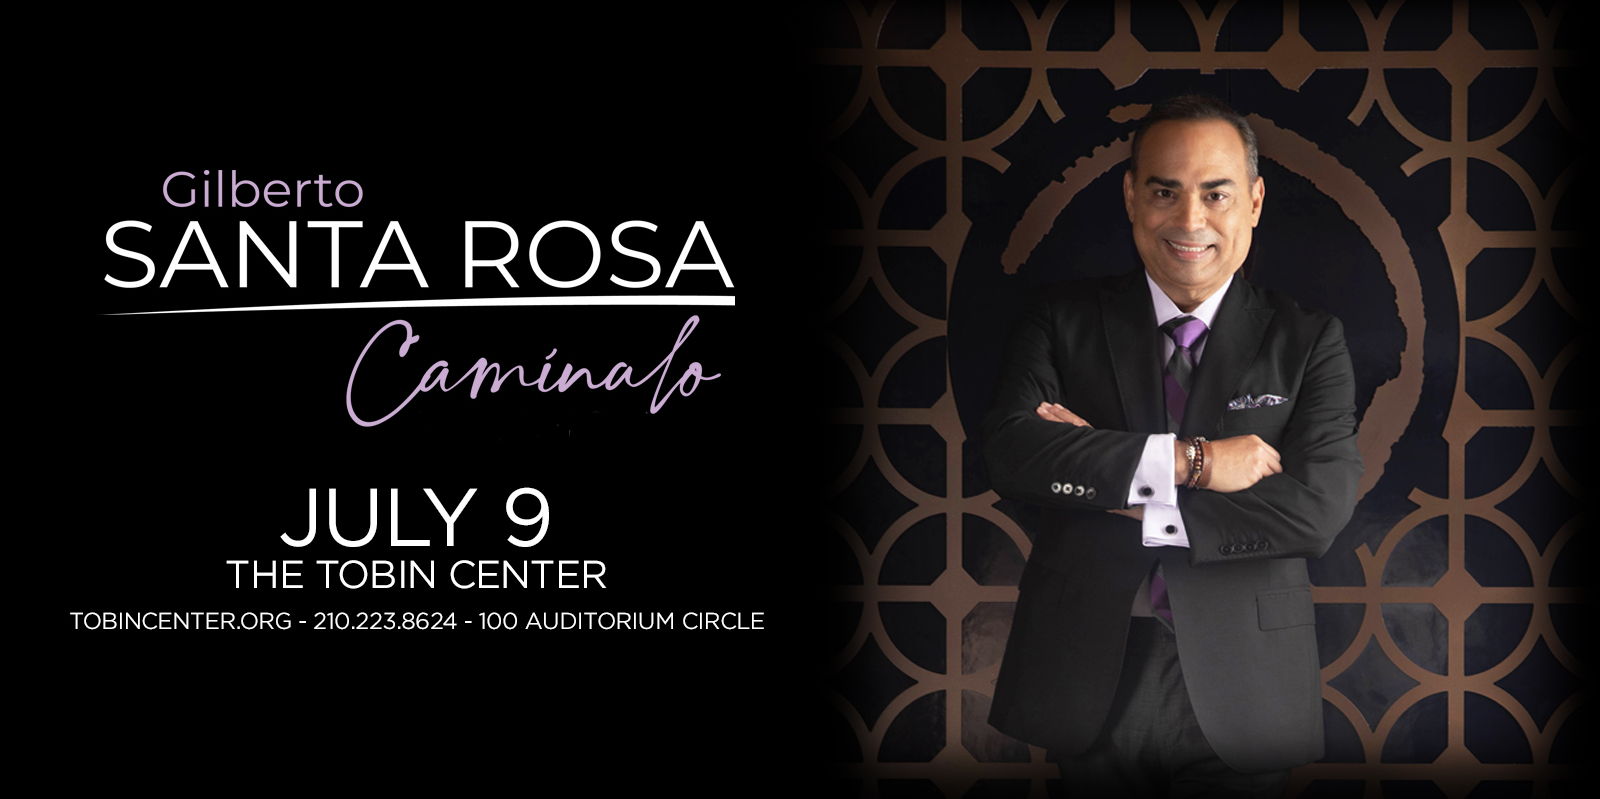 Gilberto Santa Rosa promotional image